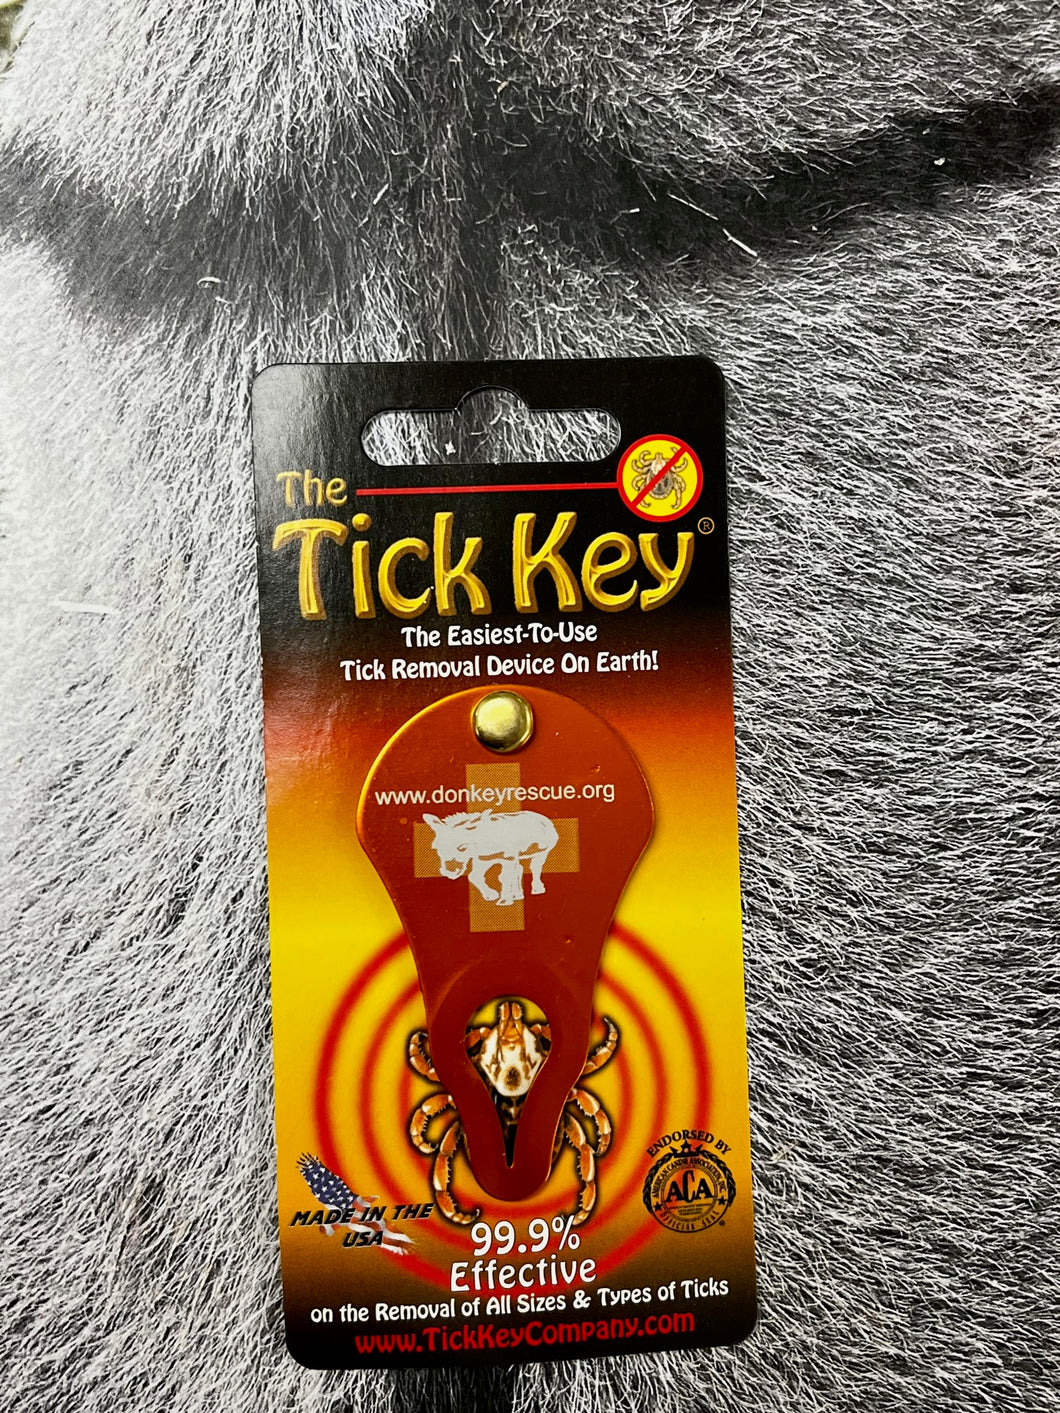 PVDR Branded Tick Key